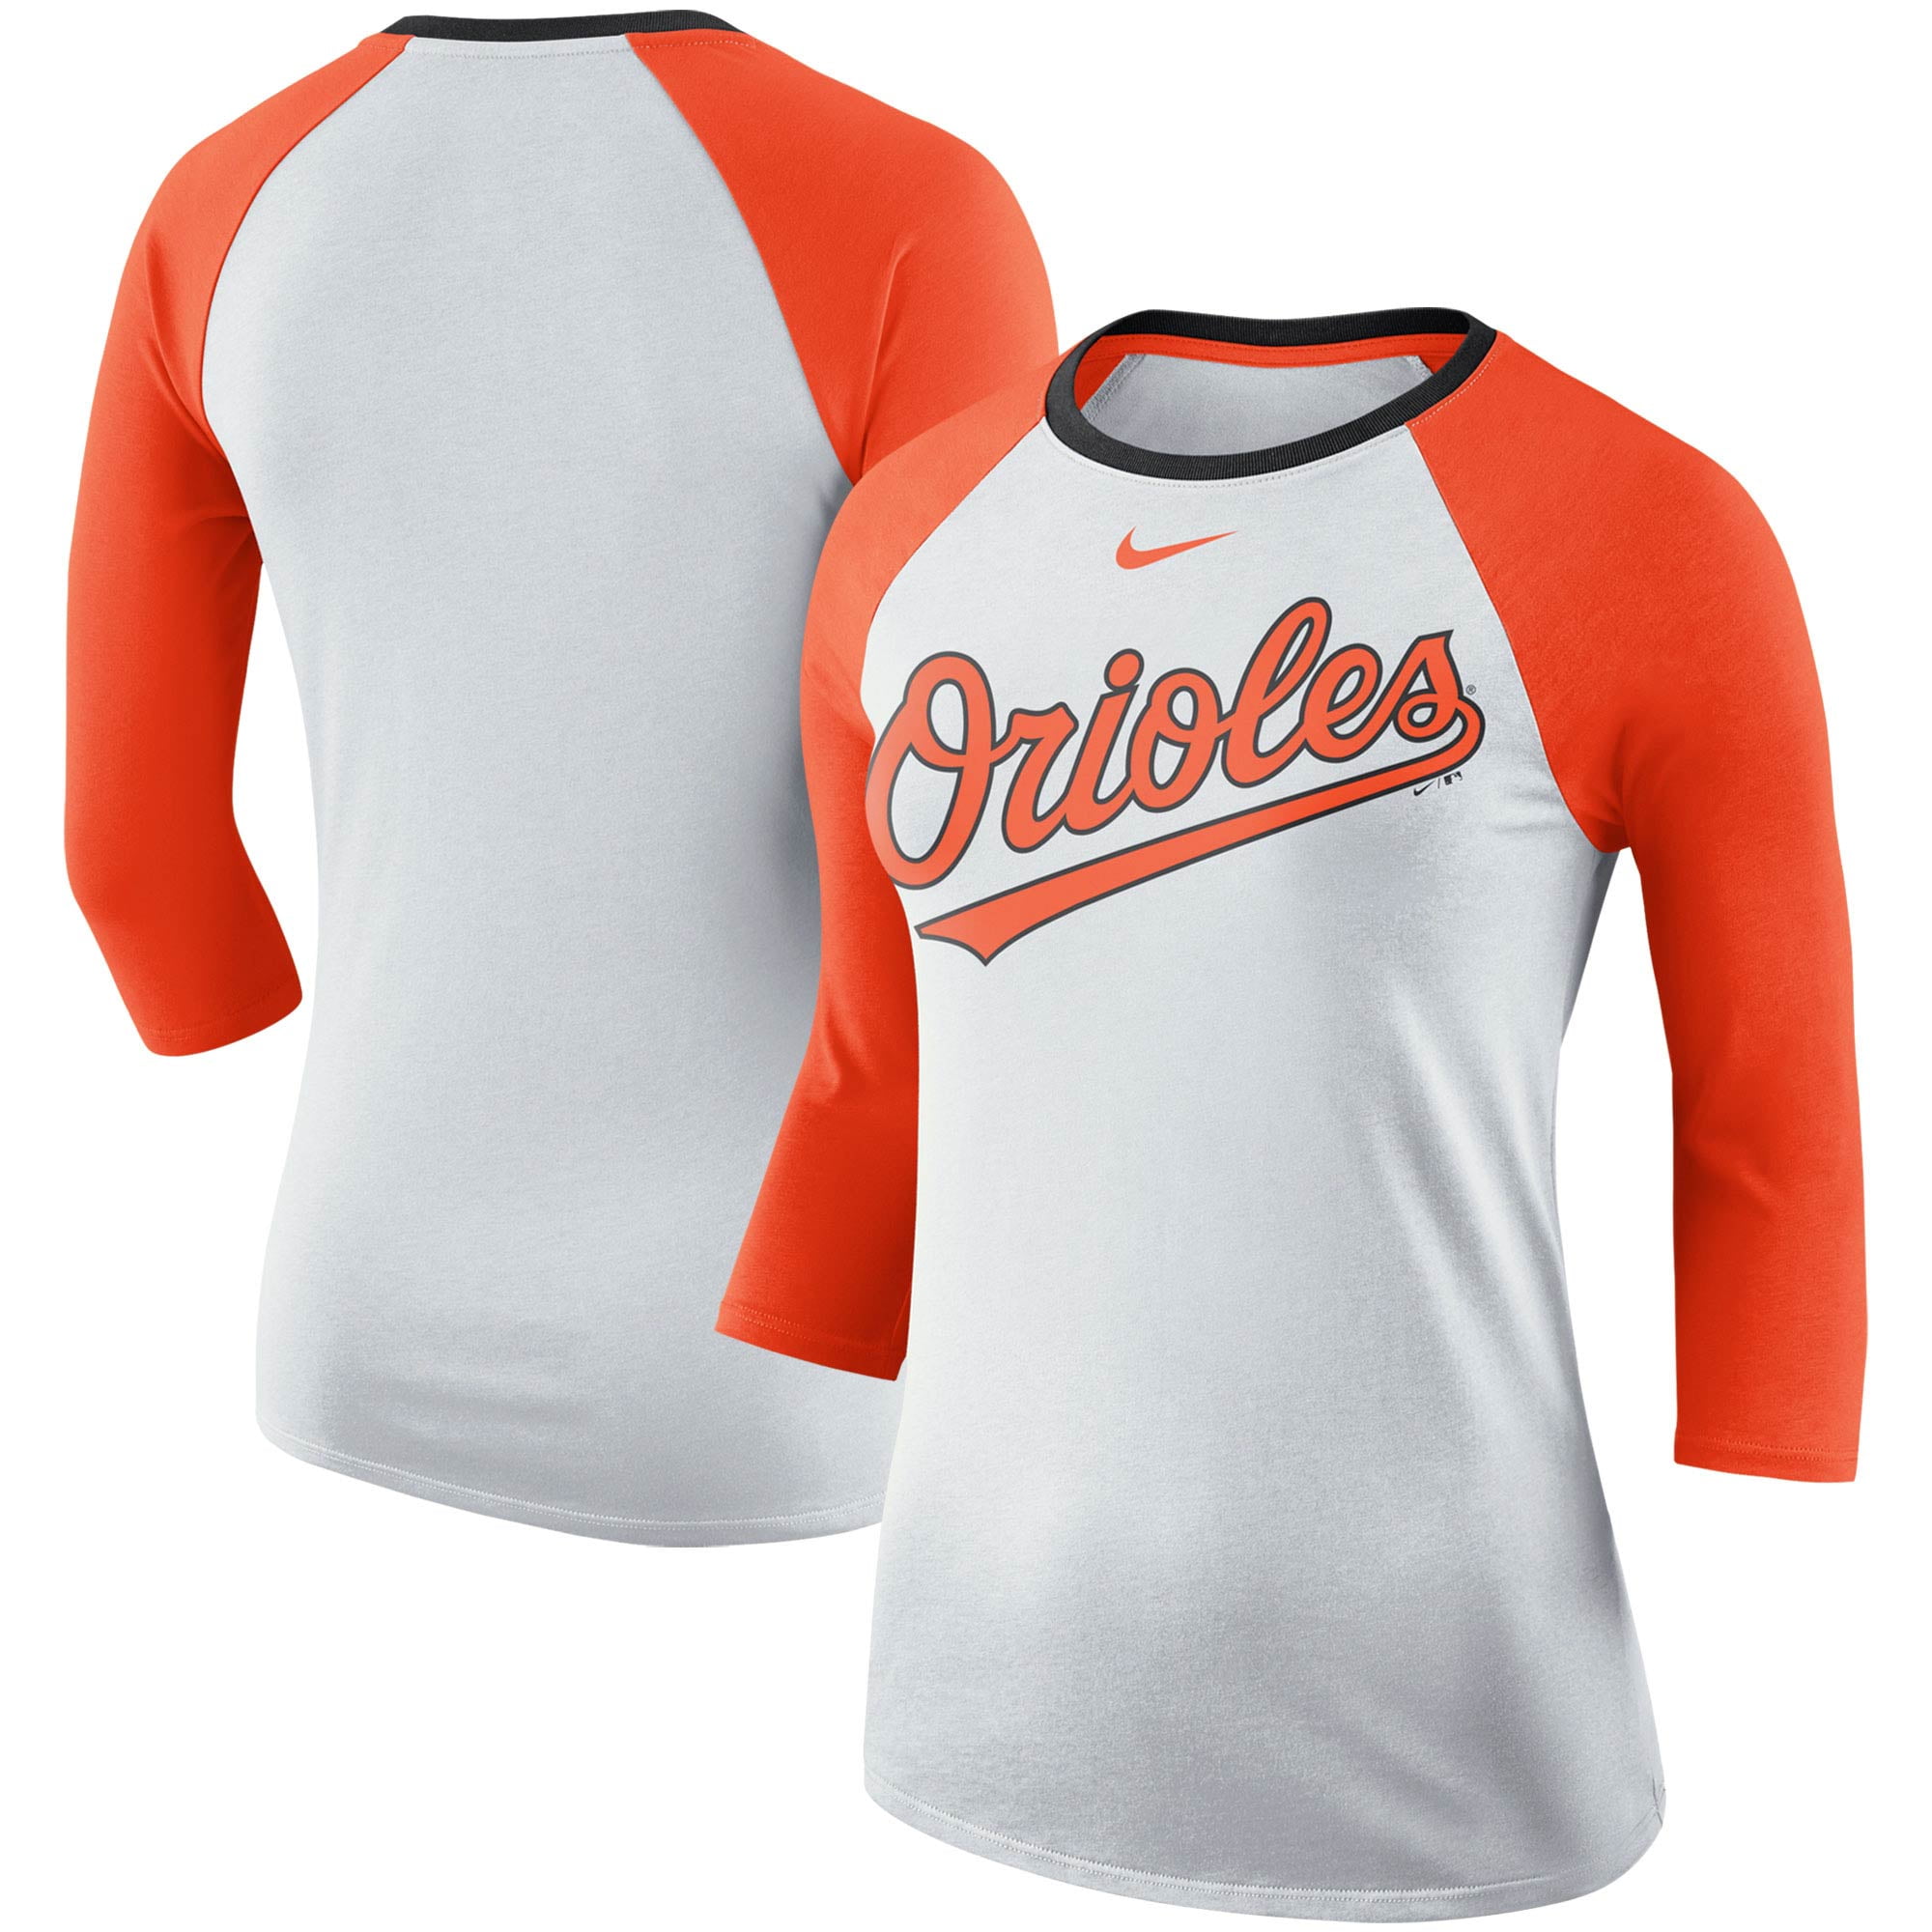 ورد دائم Women's Nike White/Orange Baltimore Orioles Tri-Blend Raglan 3/4 ... ورد دائم